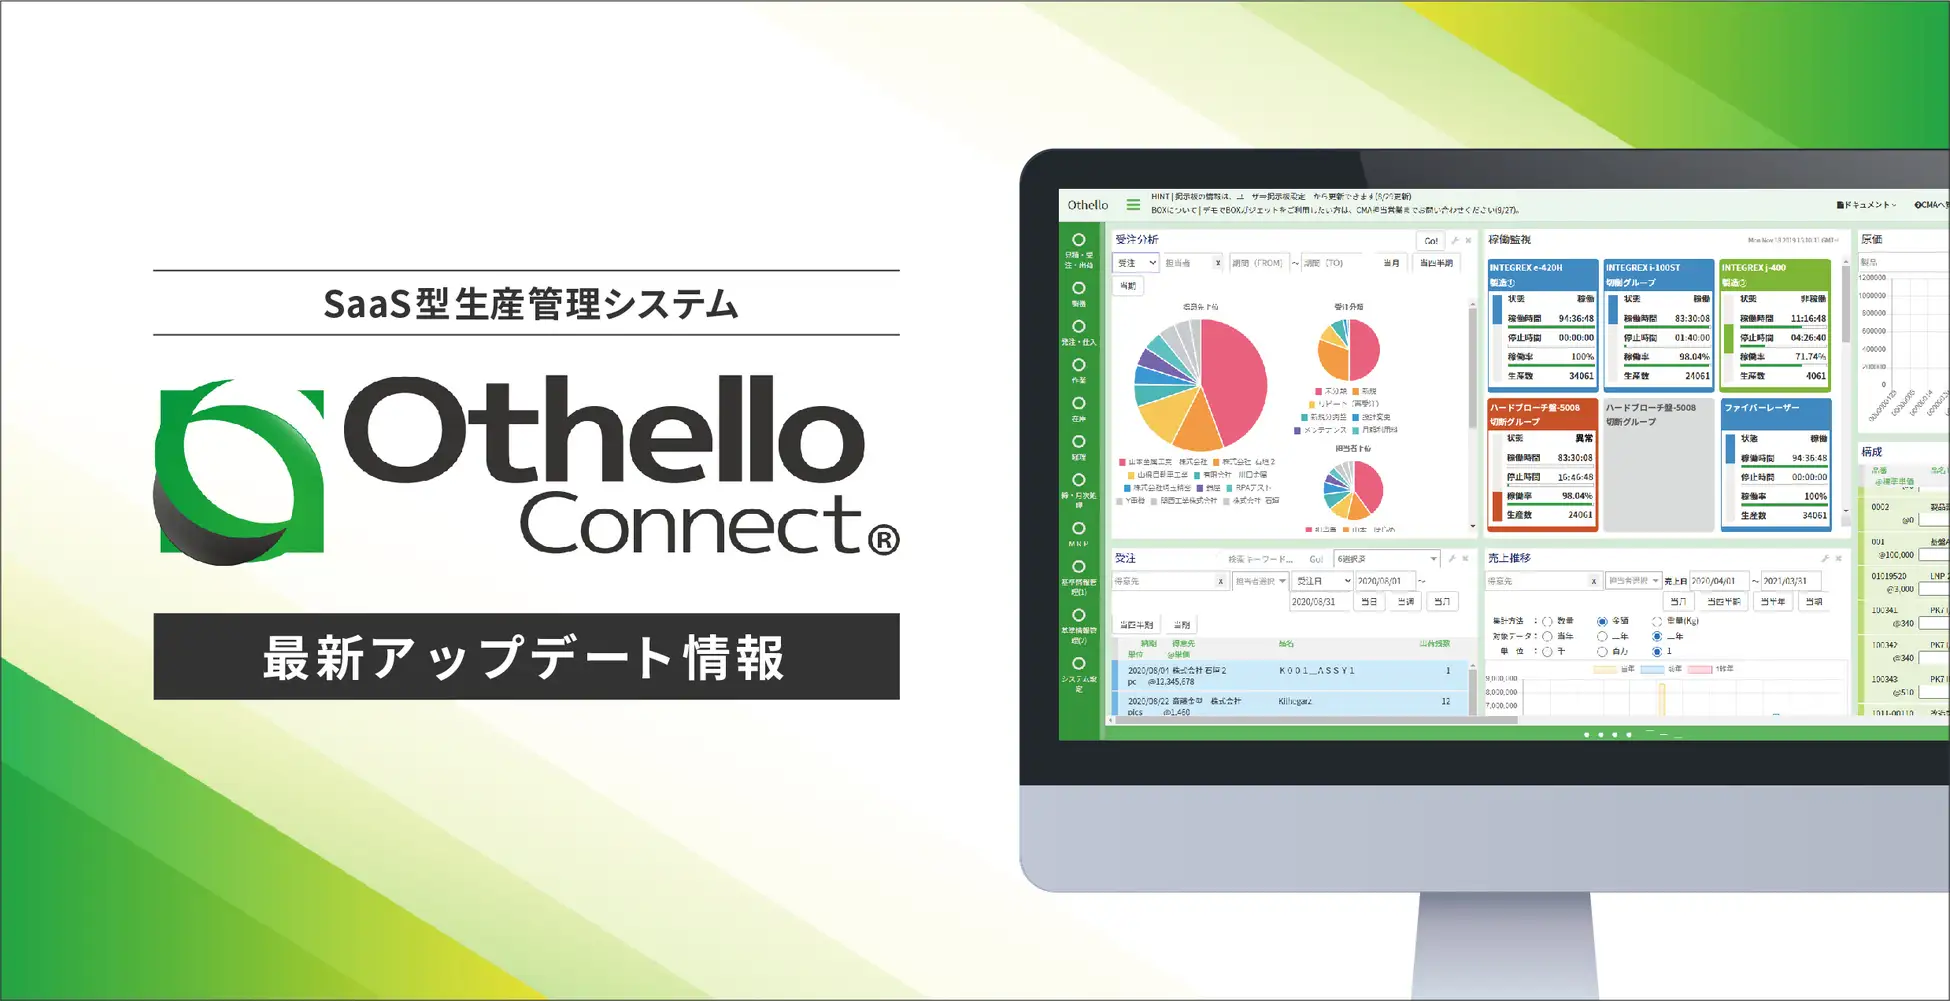 「PRTIMES」にOthello Connectの大型アップデート情報が公開されました。